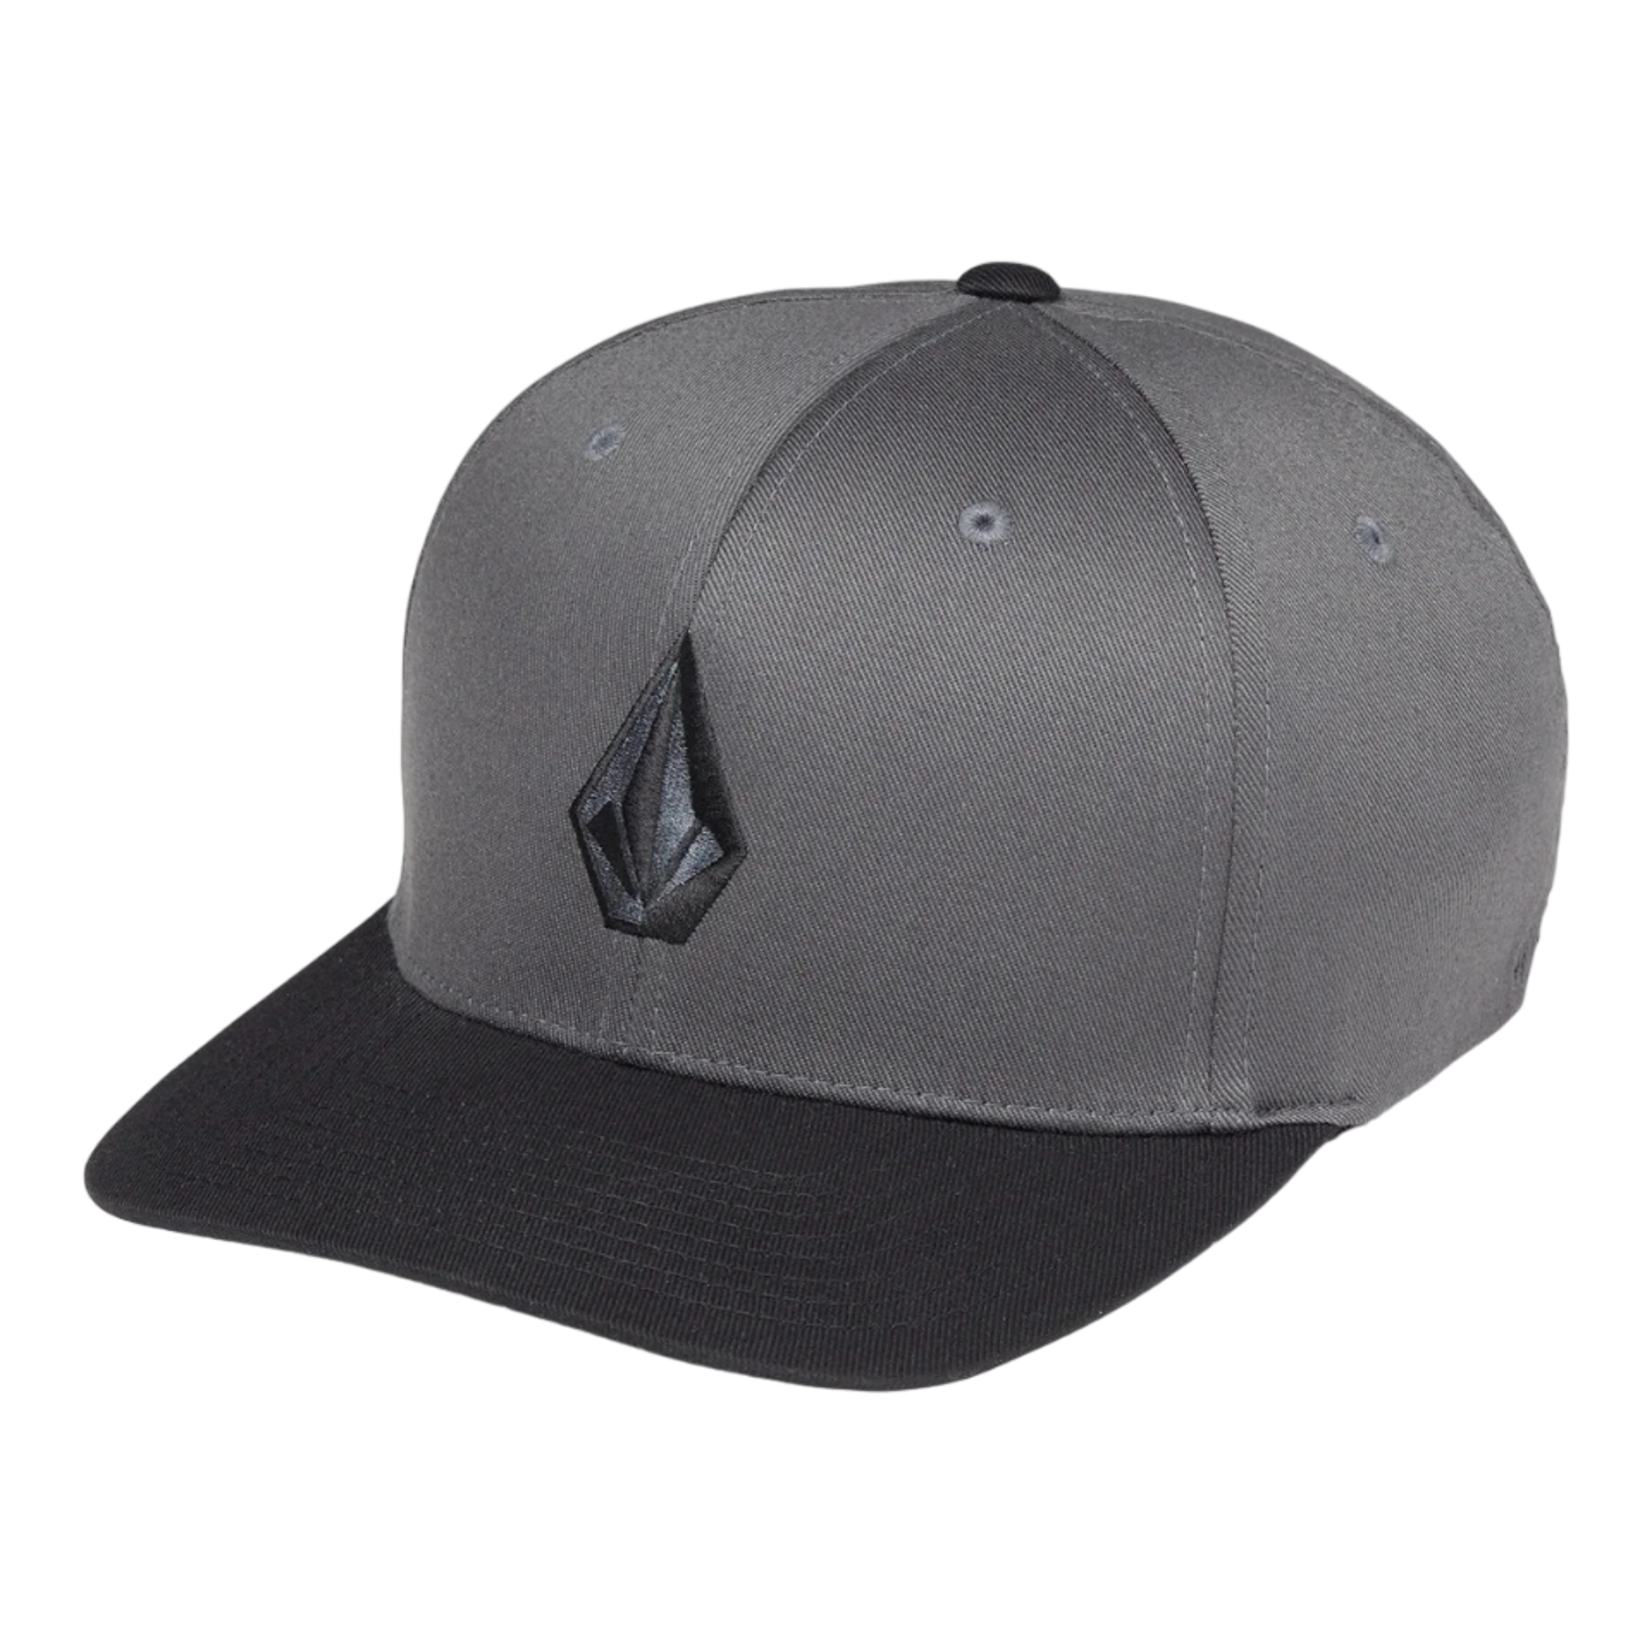 Volcom Volcom Full Stone Flex Fit Hat - Asphalt Black - Large/X-Large